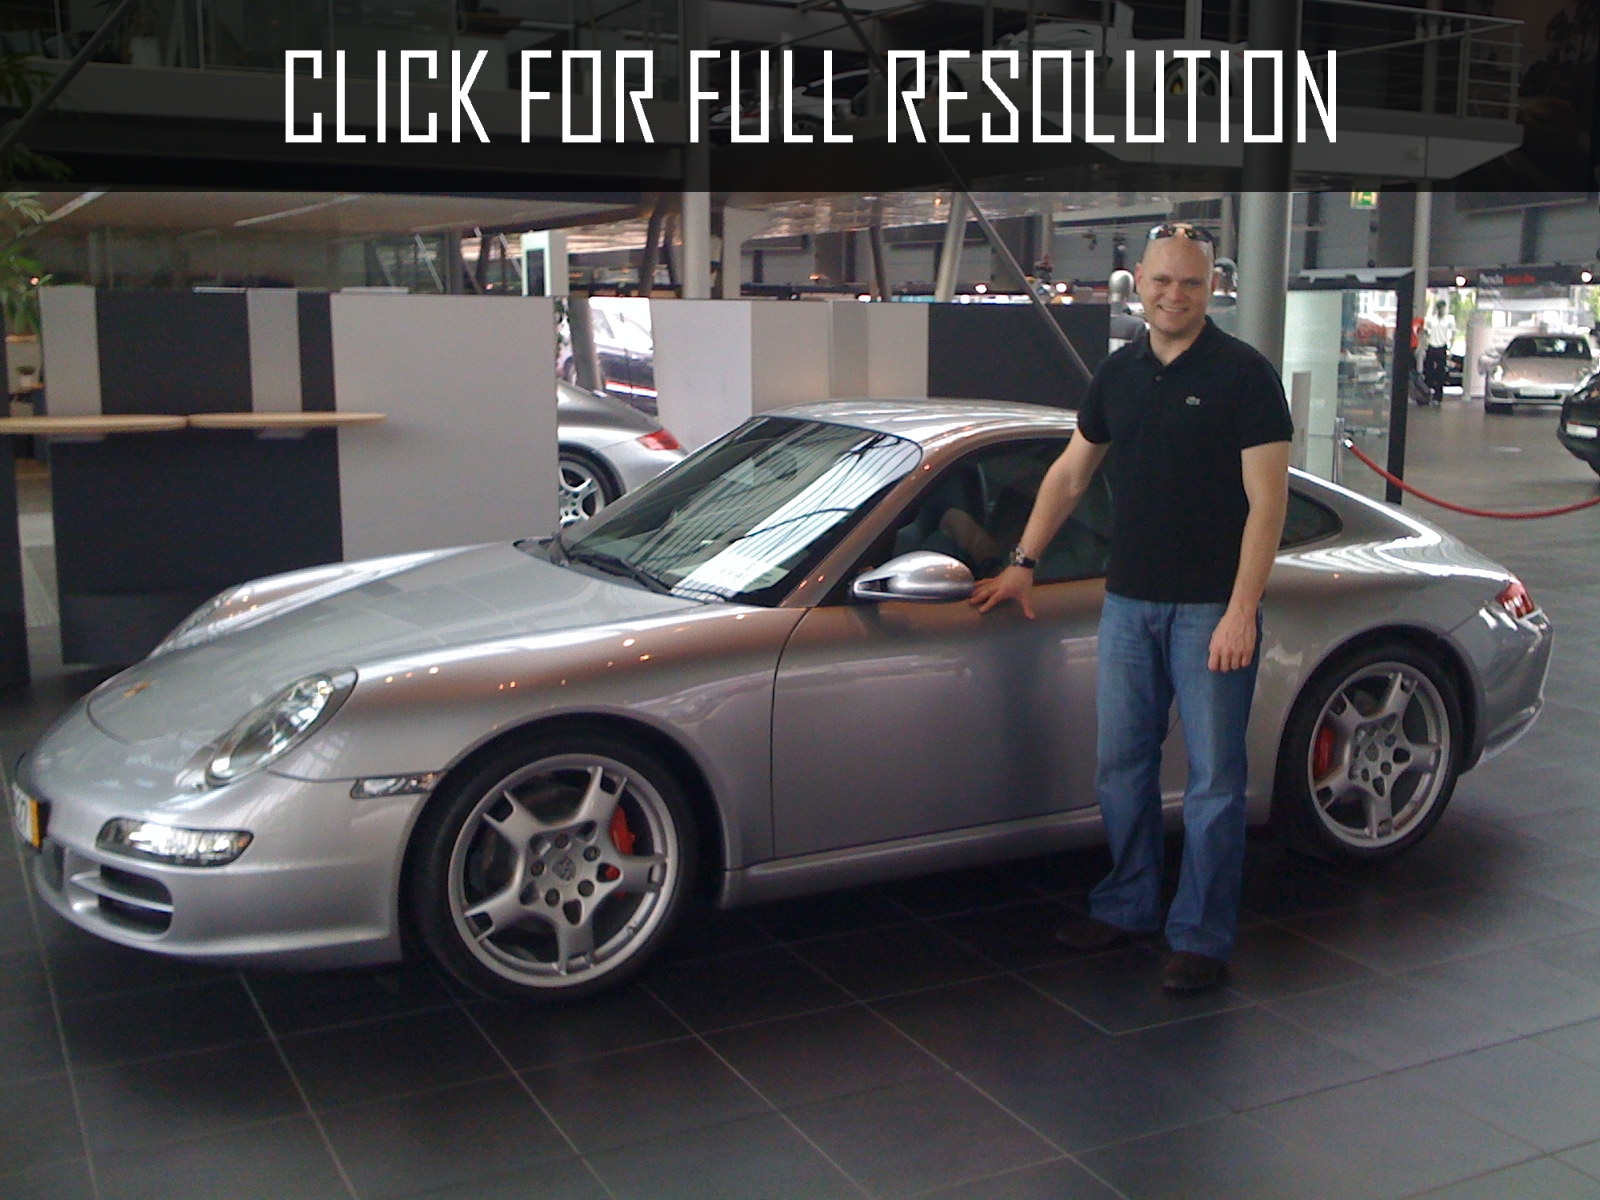 2006 Porsche 911 Carrera